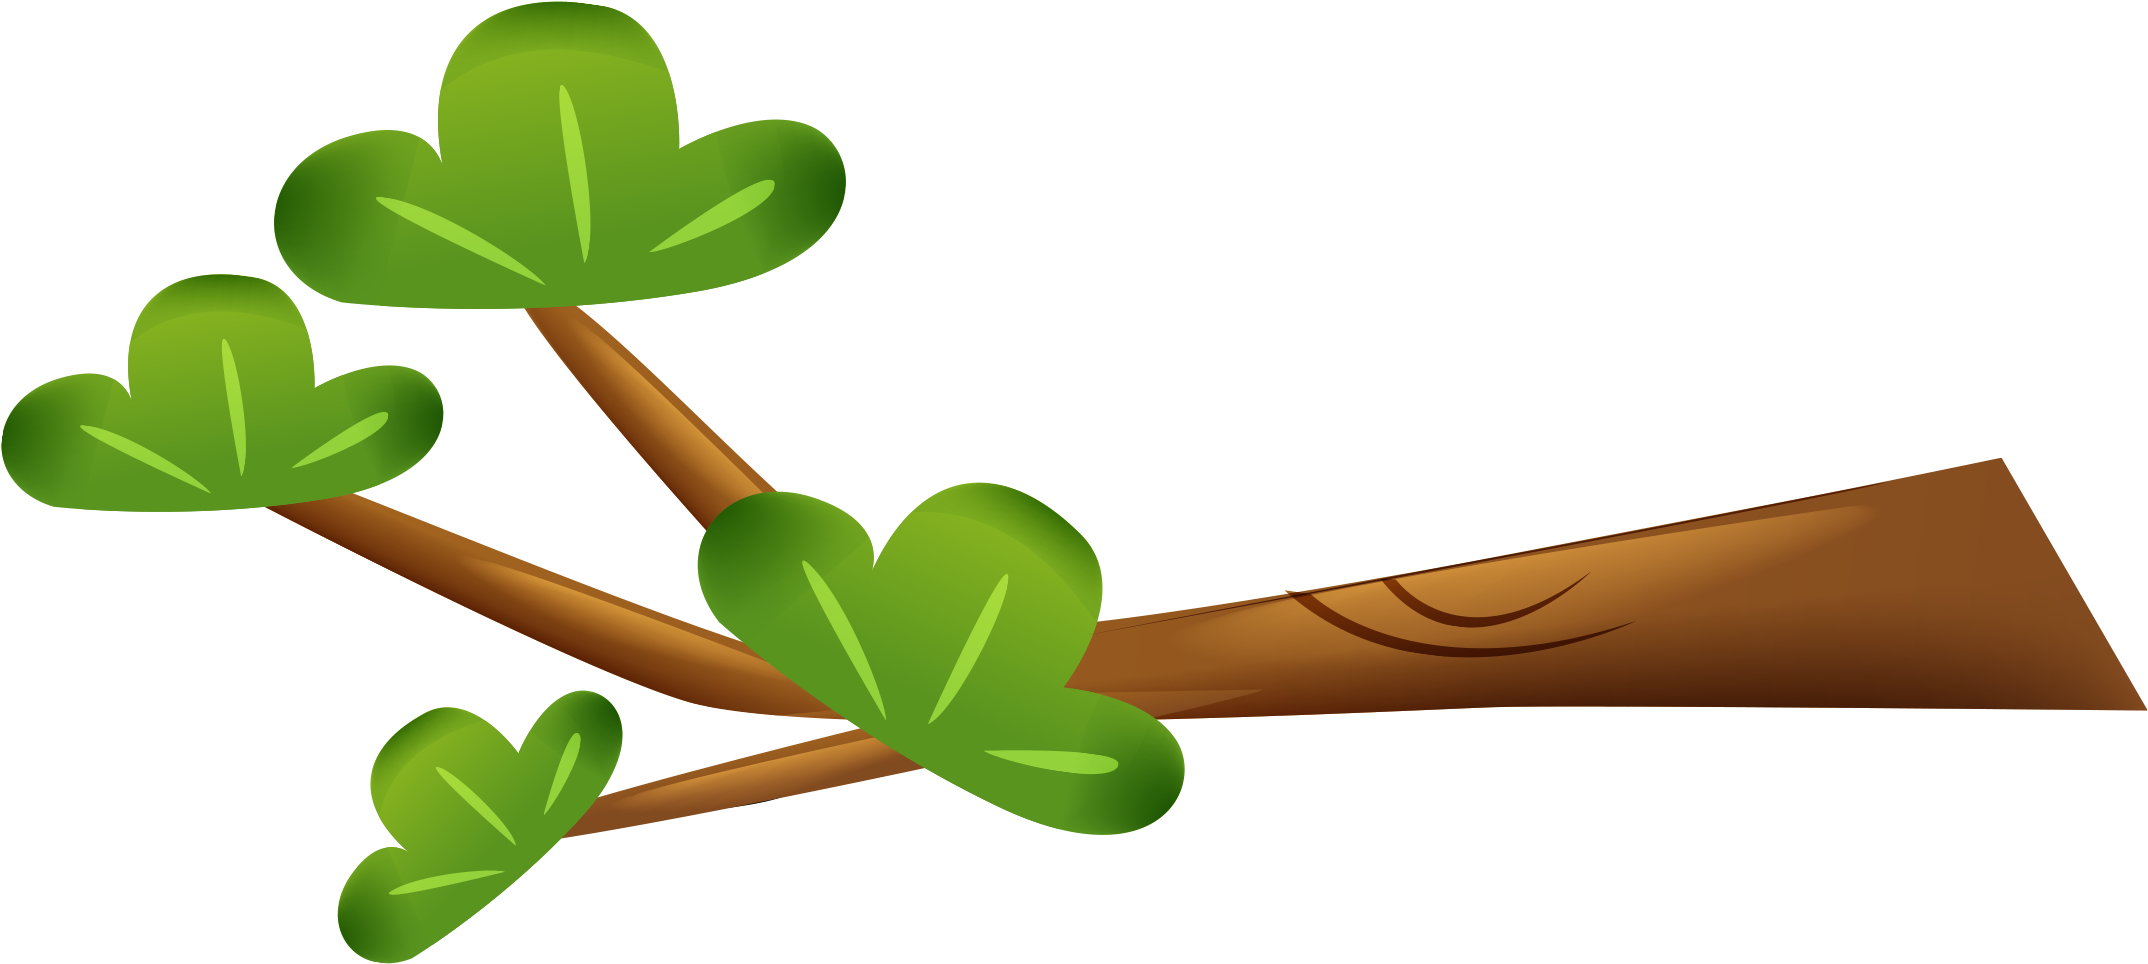 Leaf Branch Animation Cartoon - Cartoon Branch With Leaves (2334x1537)